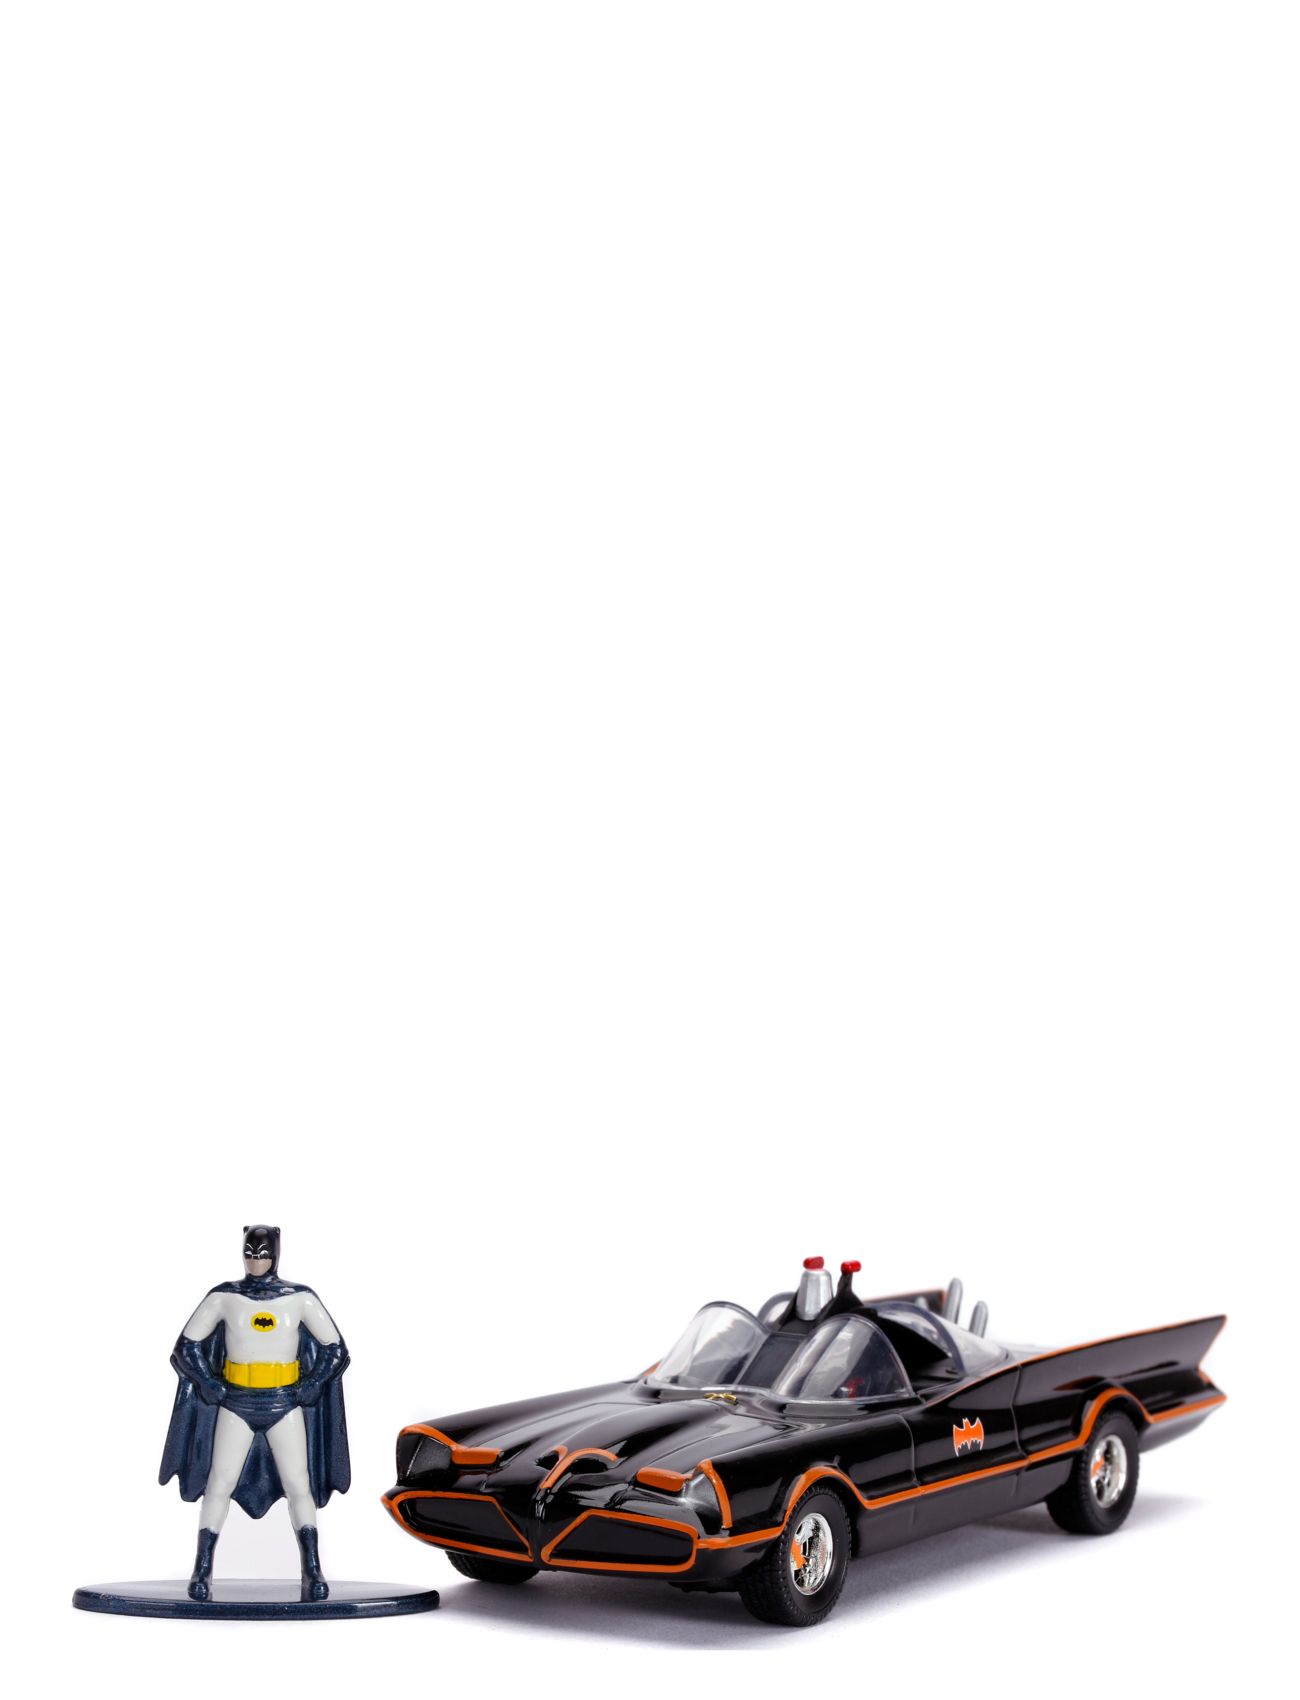 Batman 1966 Classic Batmobile 1:32 Toys Toy Cars & Vehicles Toy Cars Black Jada Toys